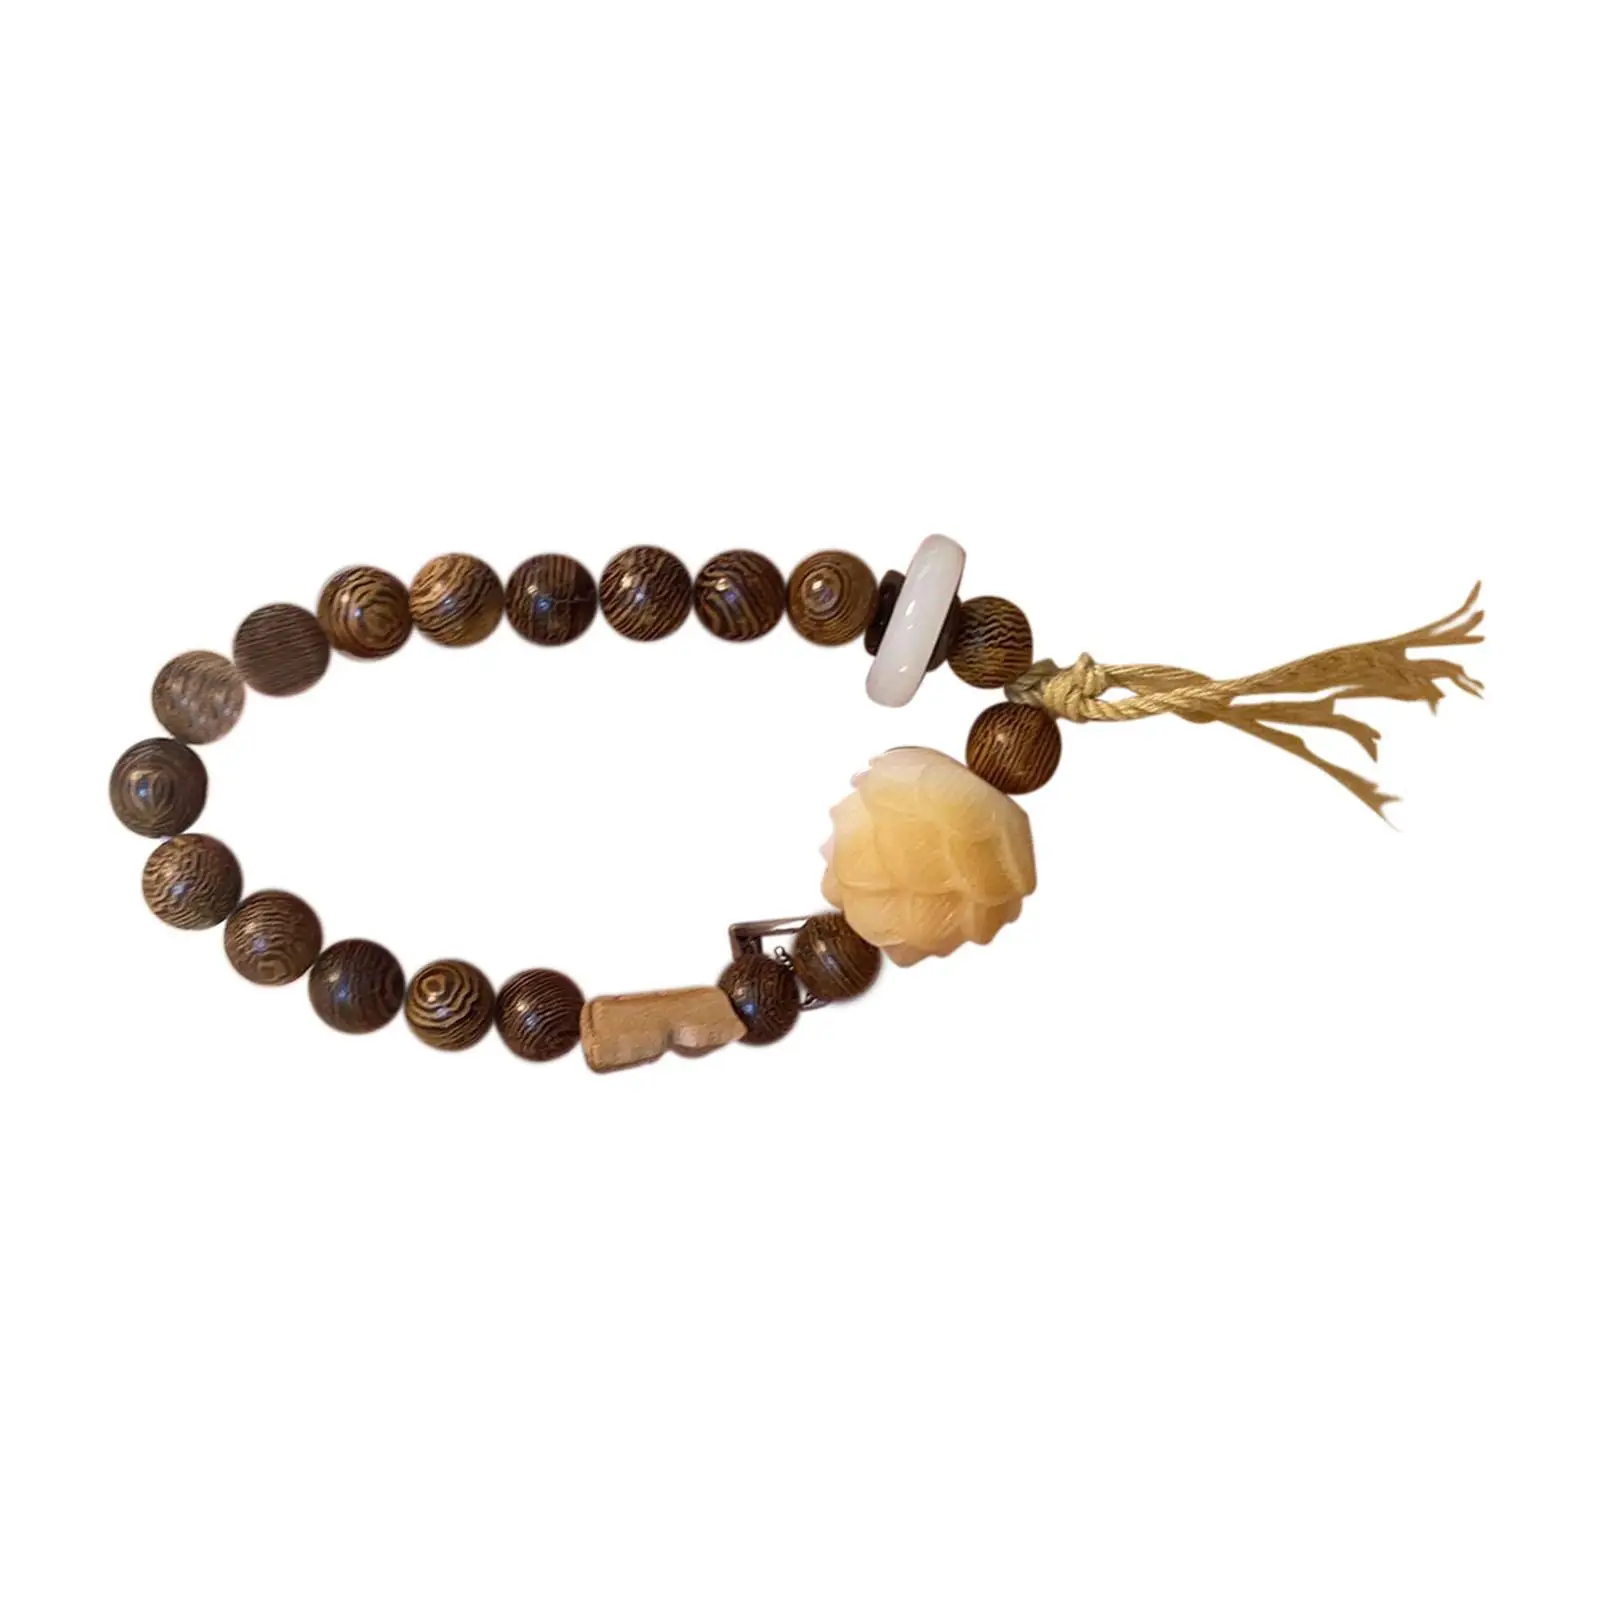 Wooden Beads Bracelet Prayer Bracelet for Men Women Jewelry Handmade Chicken Wing Wood Beads Bracelet Beaded Bracelet